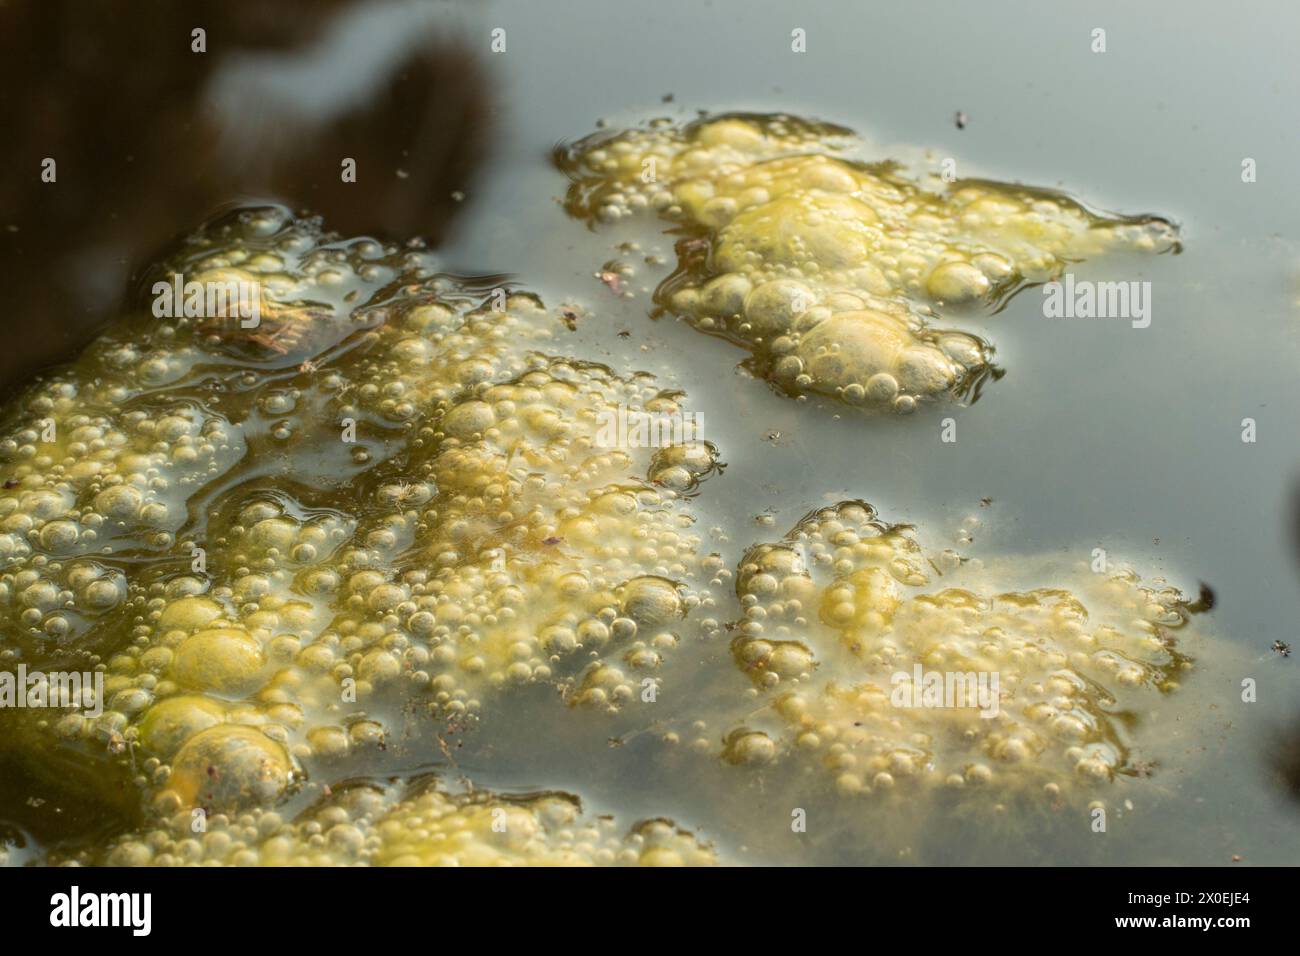 infrared image of greenish algae sludge floating on the surface of the well. Stock Photo